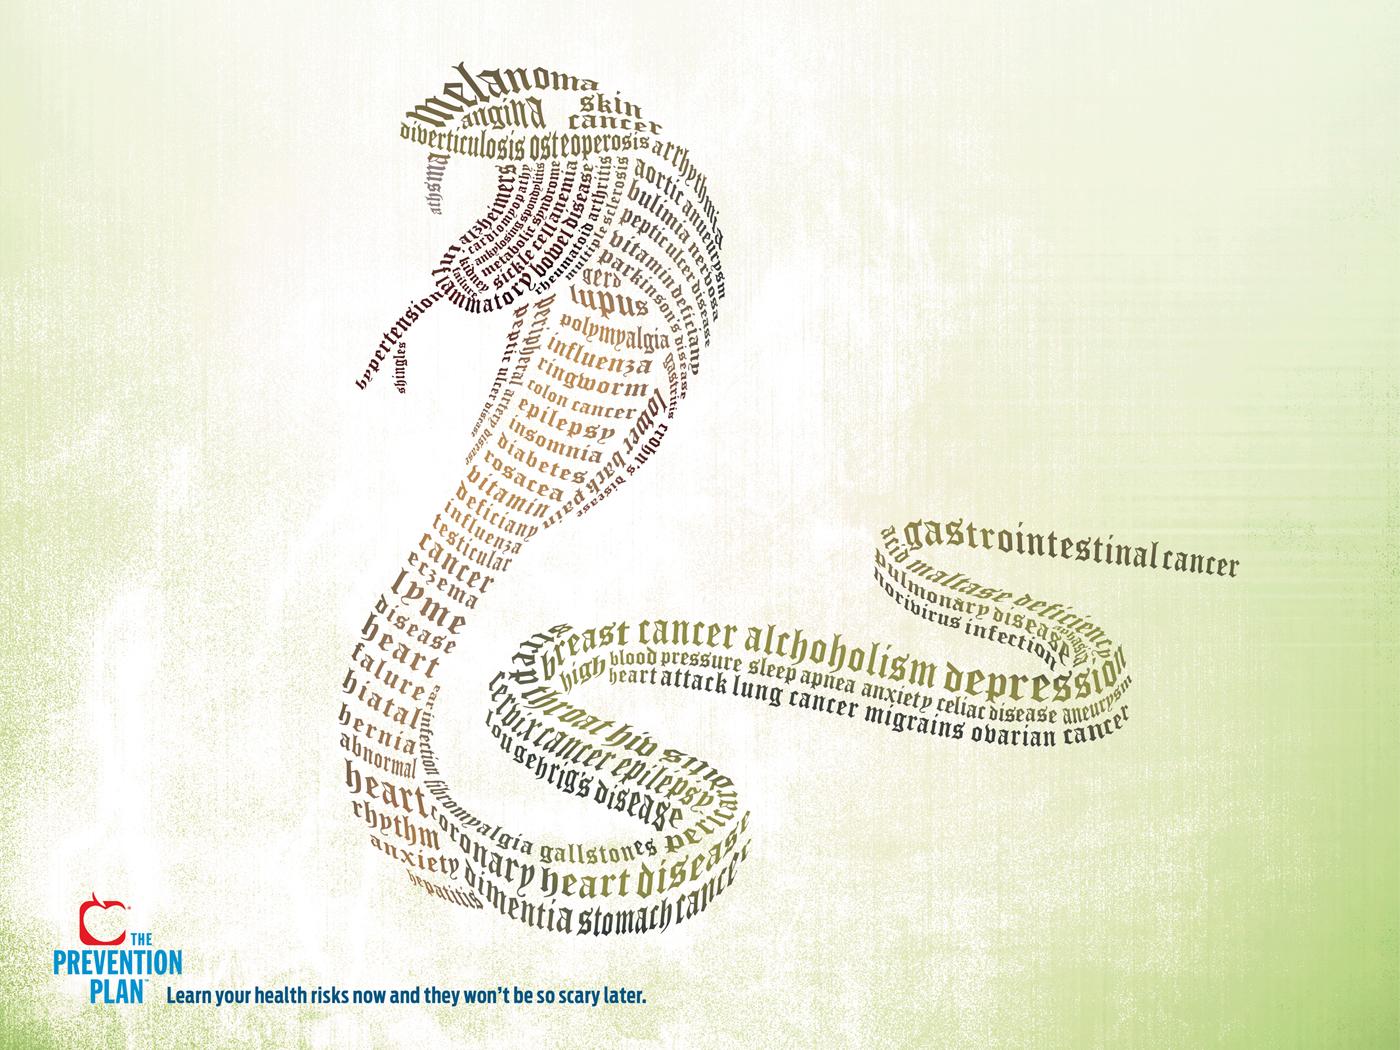 Creative Typography Ads - US Preventive Medicine / The Prevention Plan: Cobra